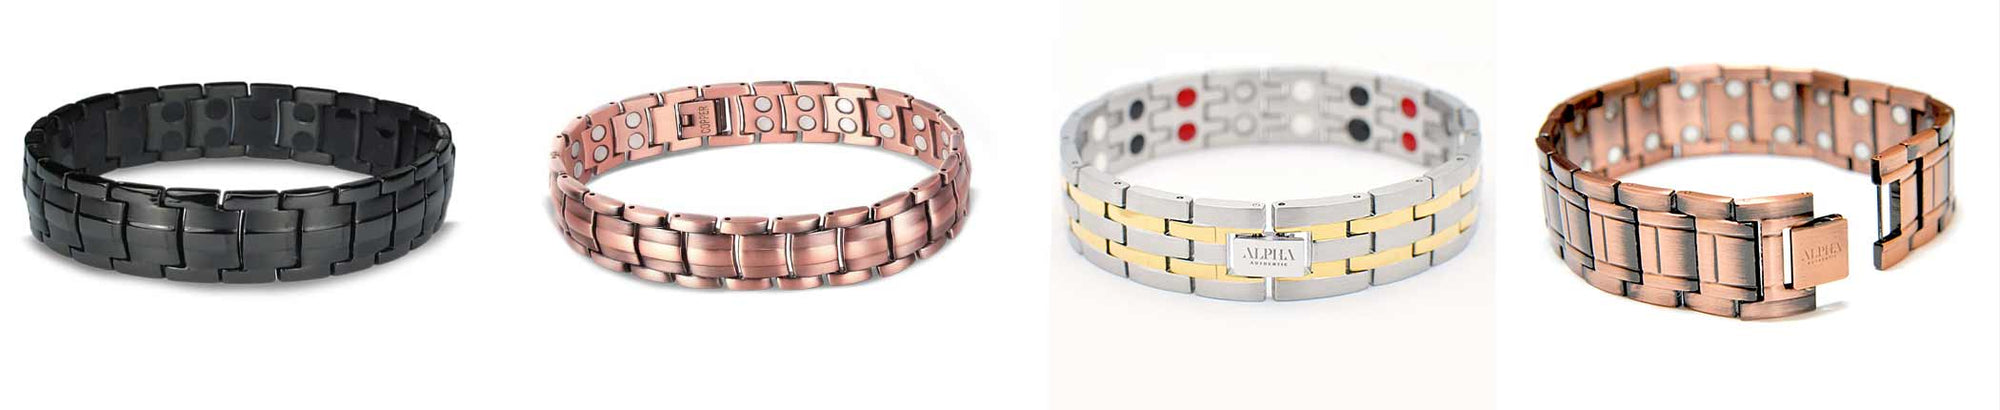 <font color=#000000>Strong magnetic bracelets for pain</font>